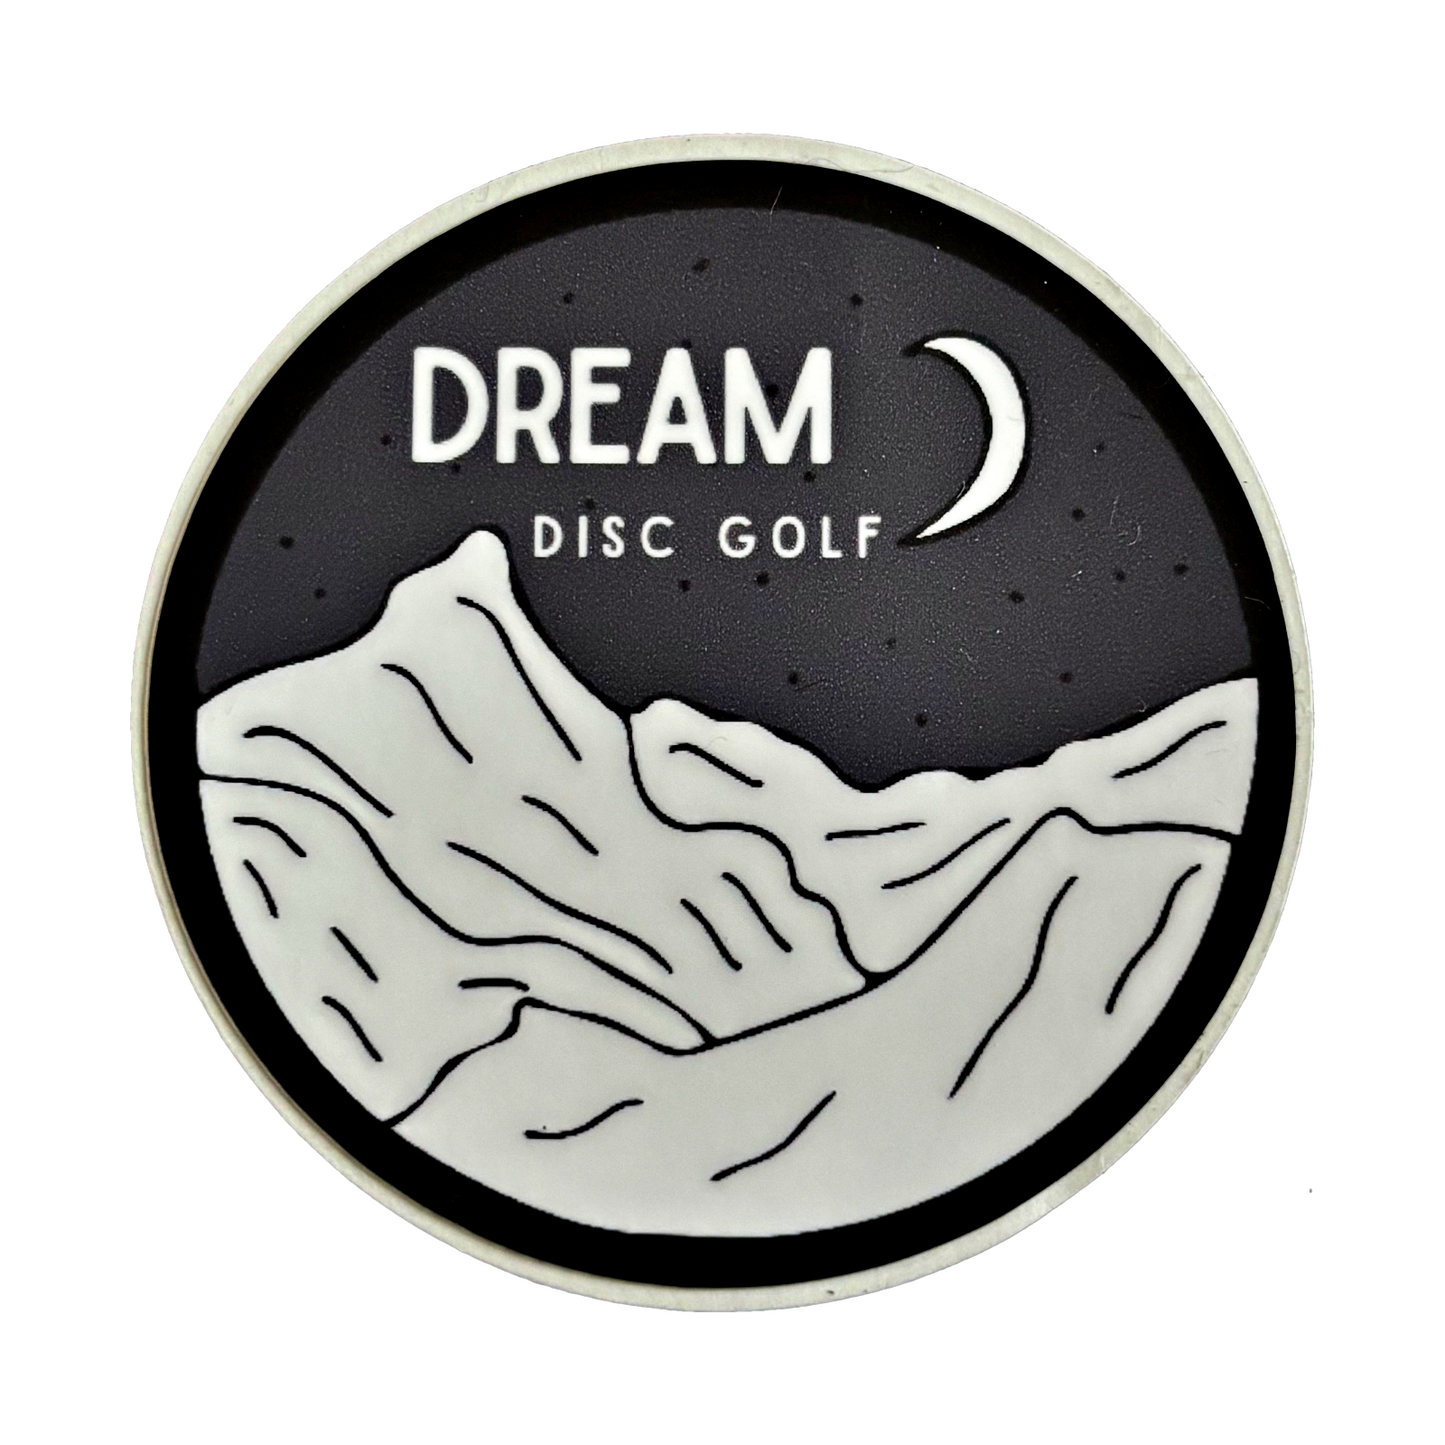 Dream DG Stickers